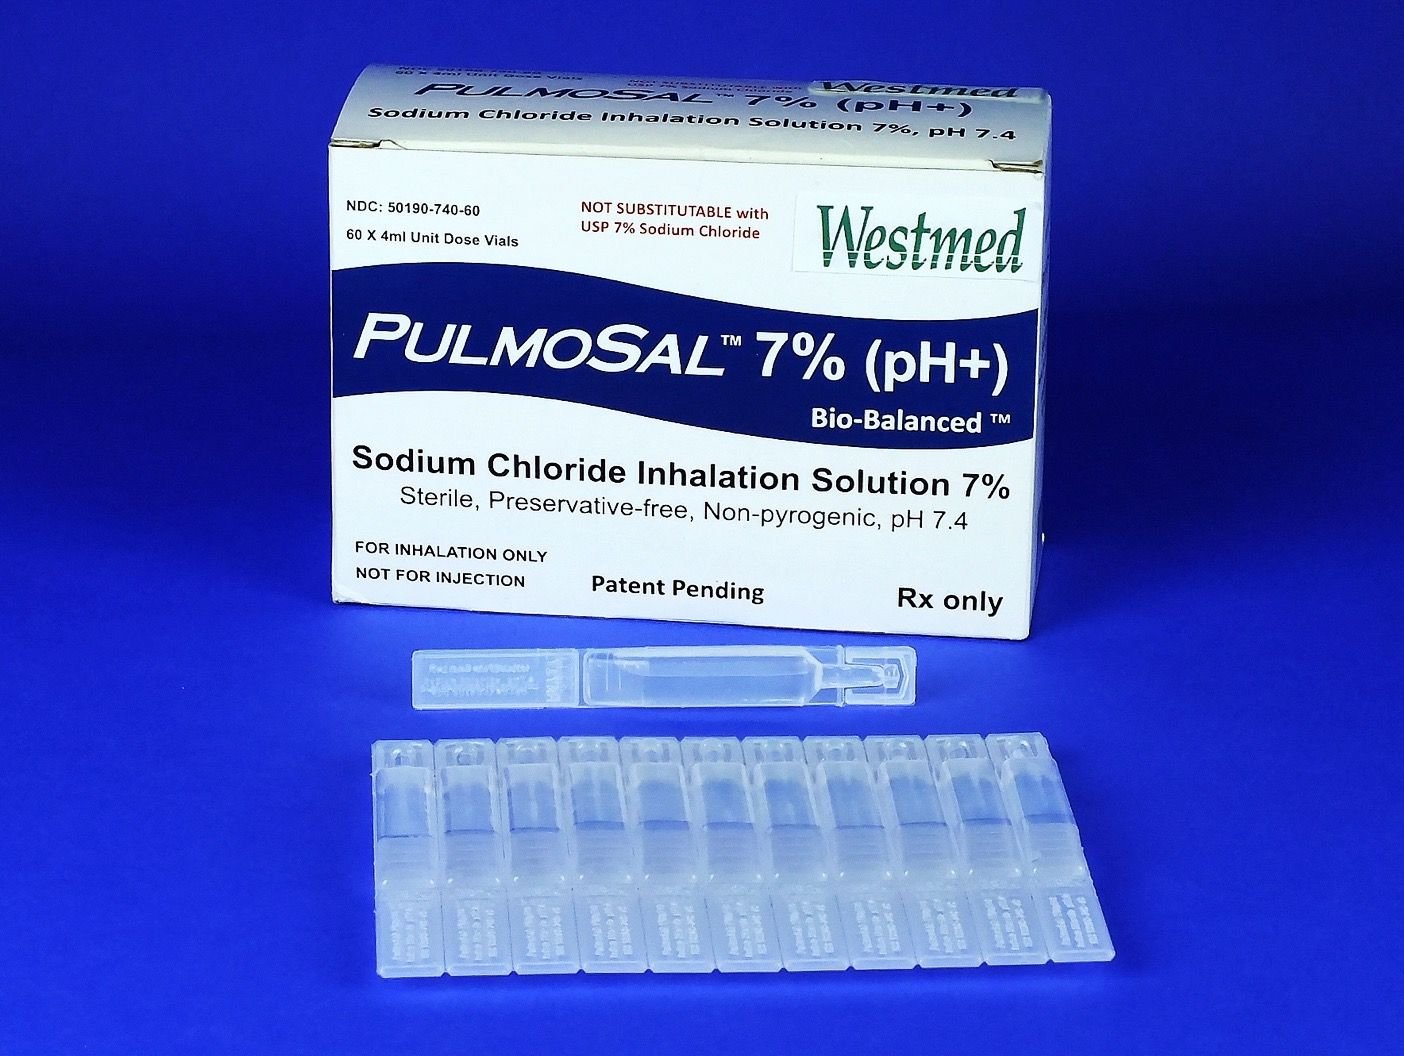 Pulmosal